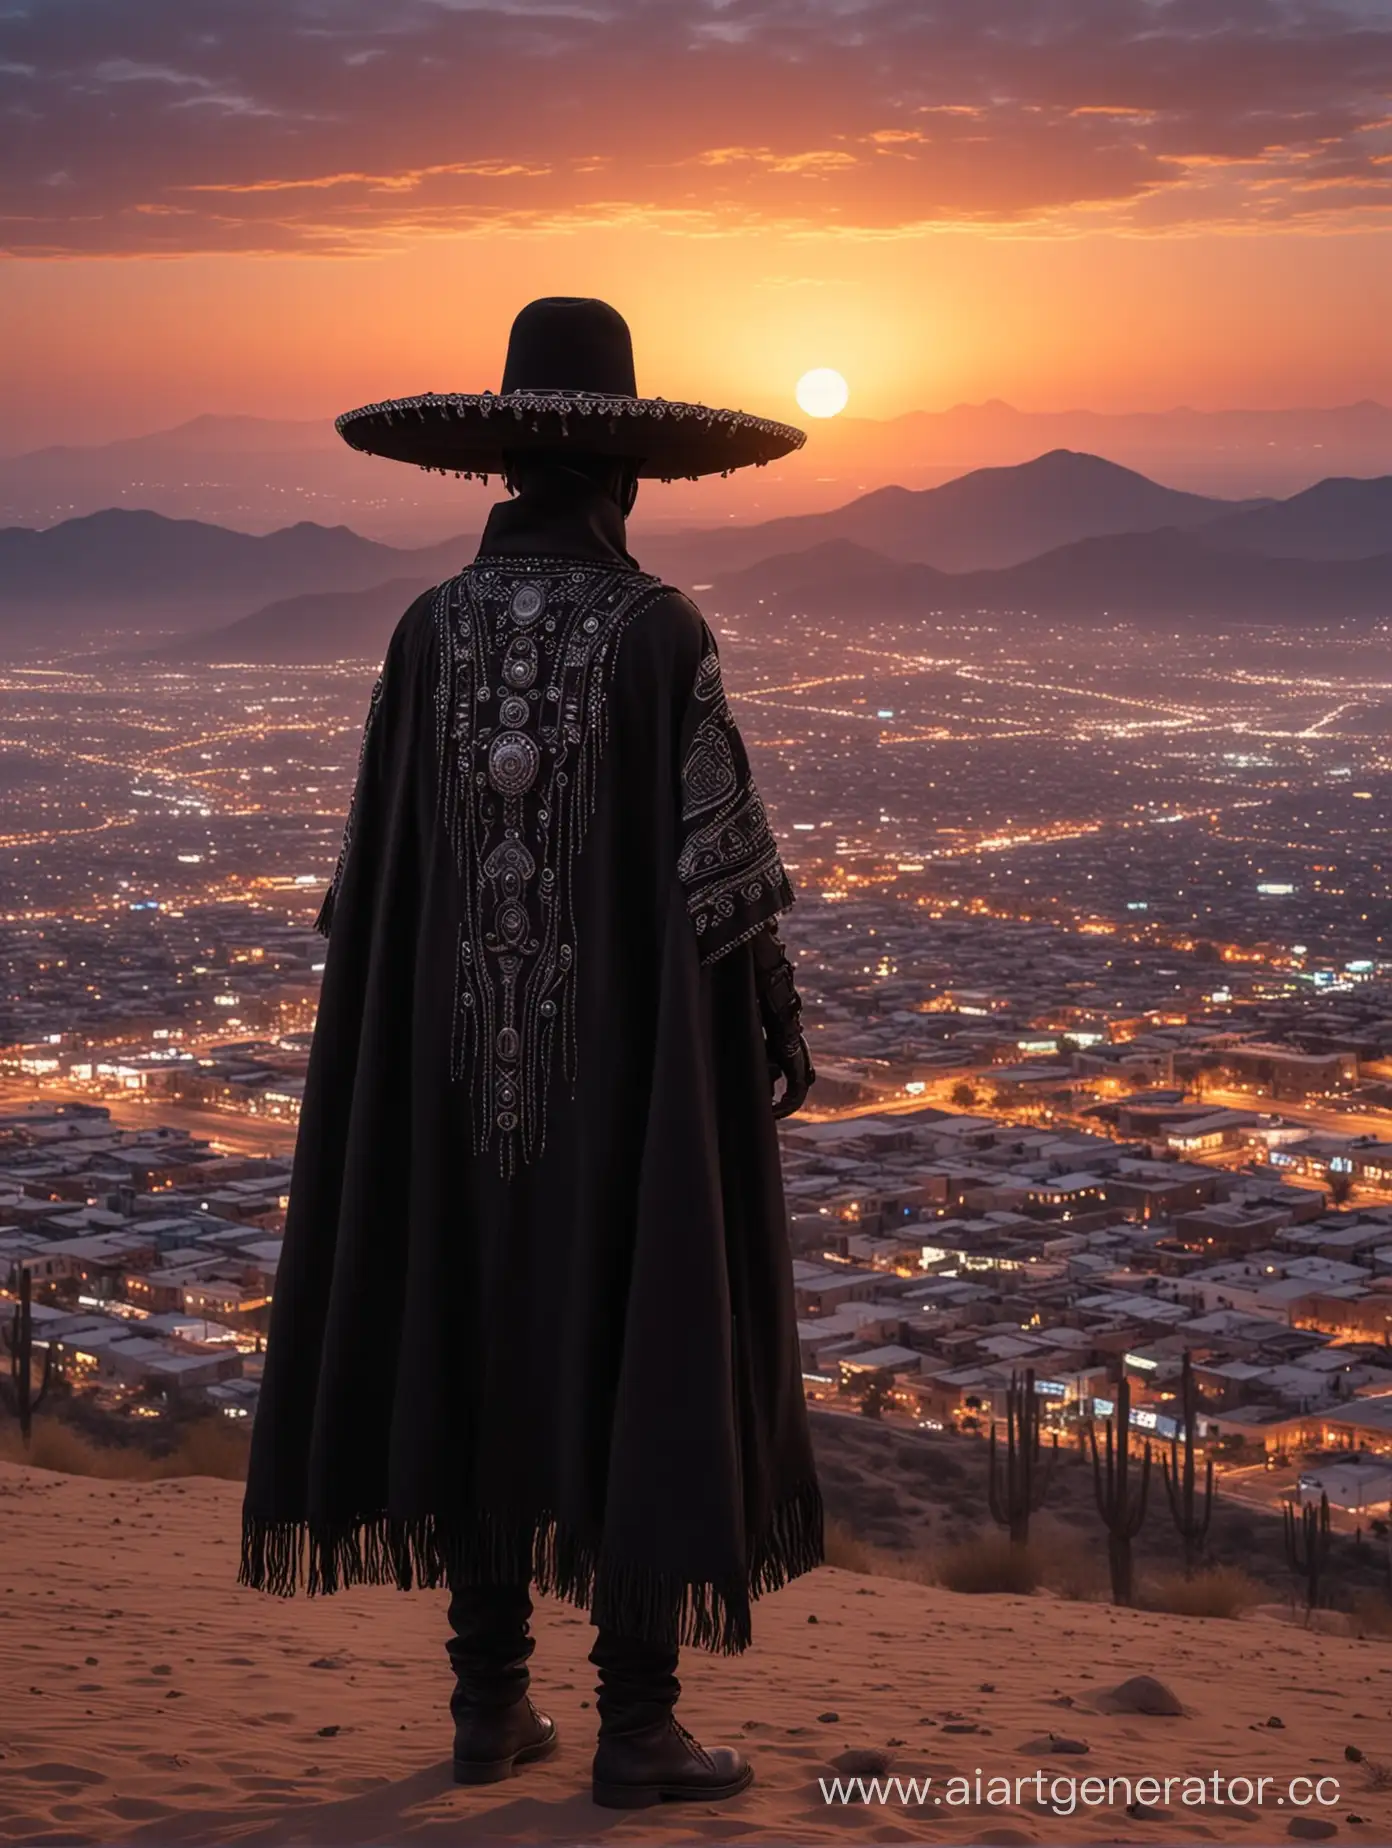 Cyborg-in-Black-Sombrero-Watching-Sunset-Over-Desert-Cityscape